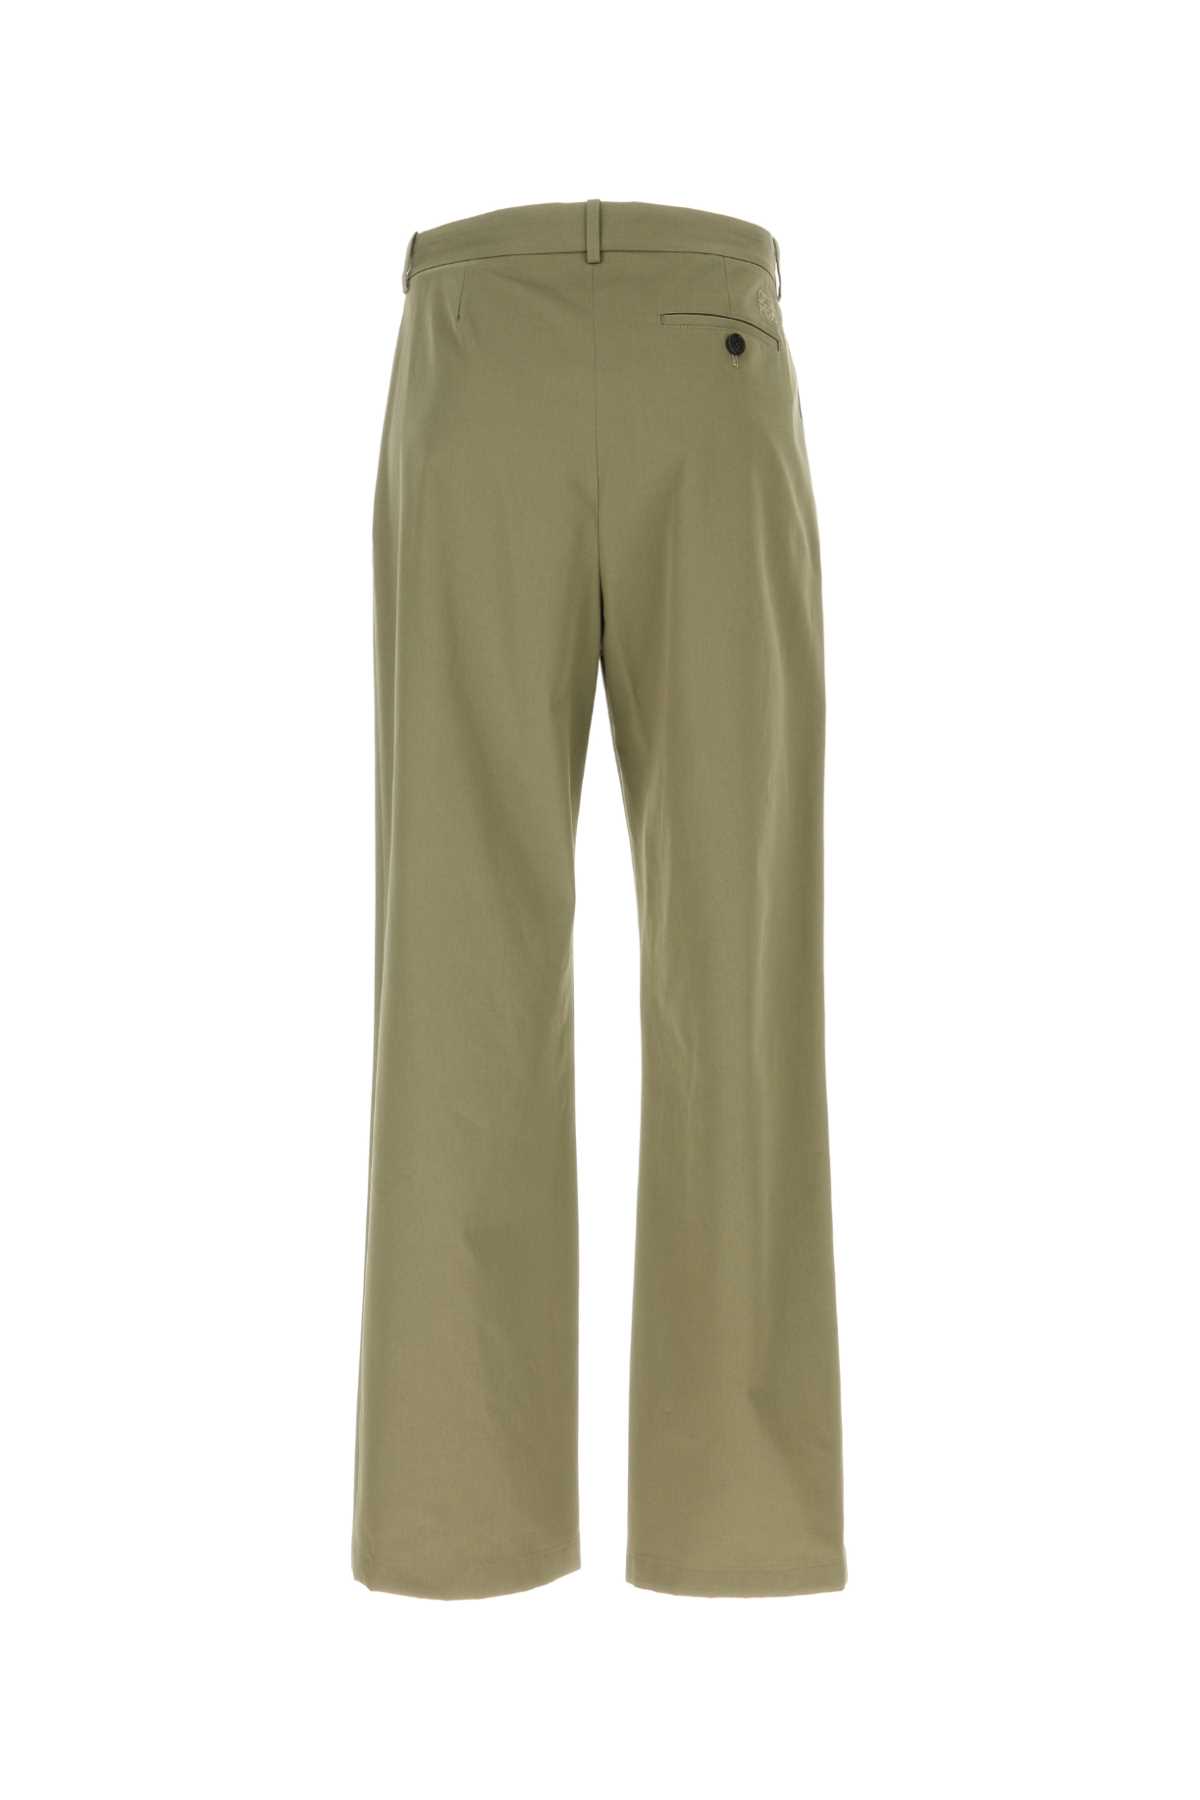 Loewe Army Green Cotton Pant In Militarygreen